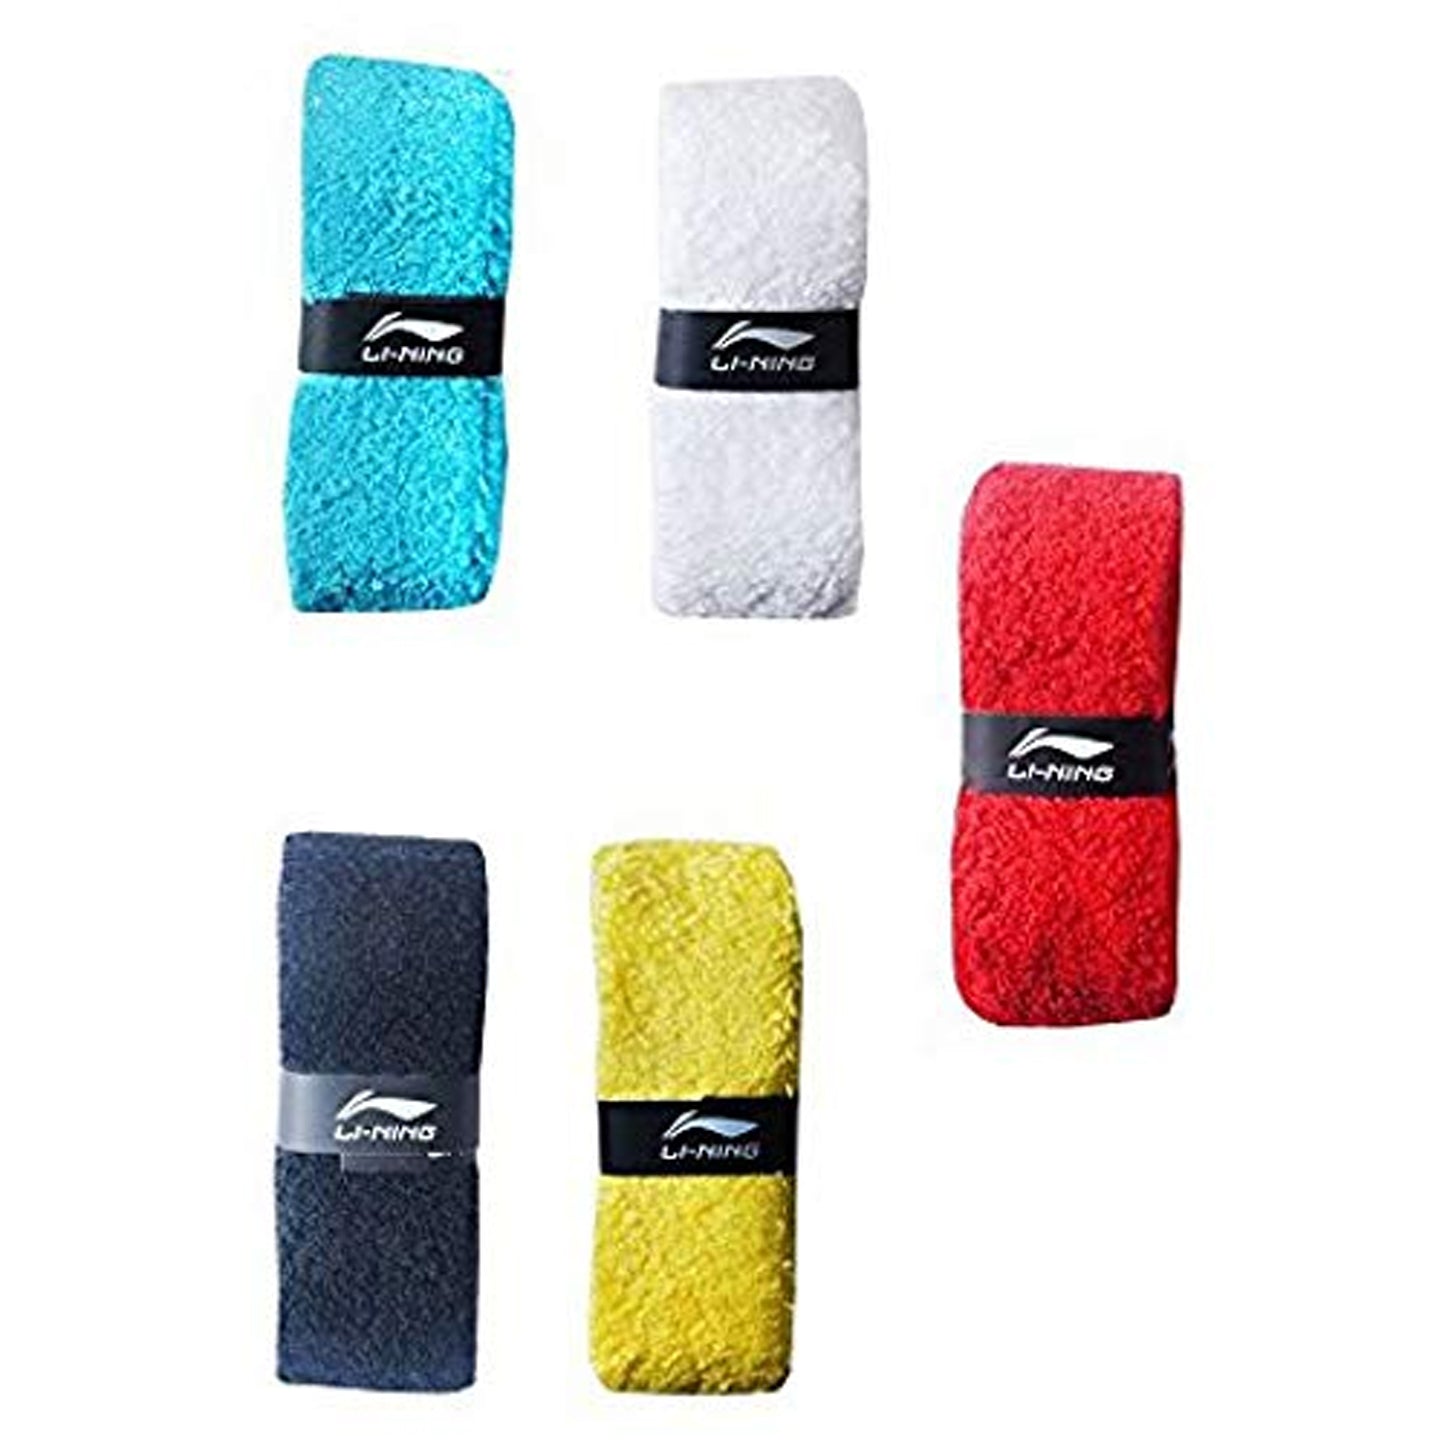 Li-Ning GC001 Towel Grip Badminton Racket Grips, Pack of 5 - Assorted Colors - Best Price online Prokicksports.com